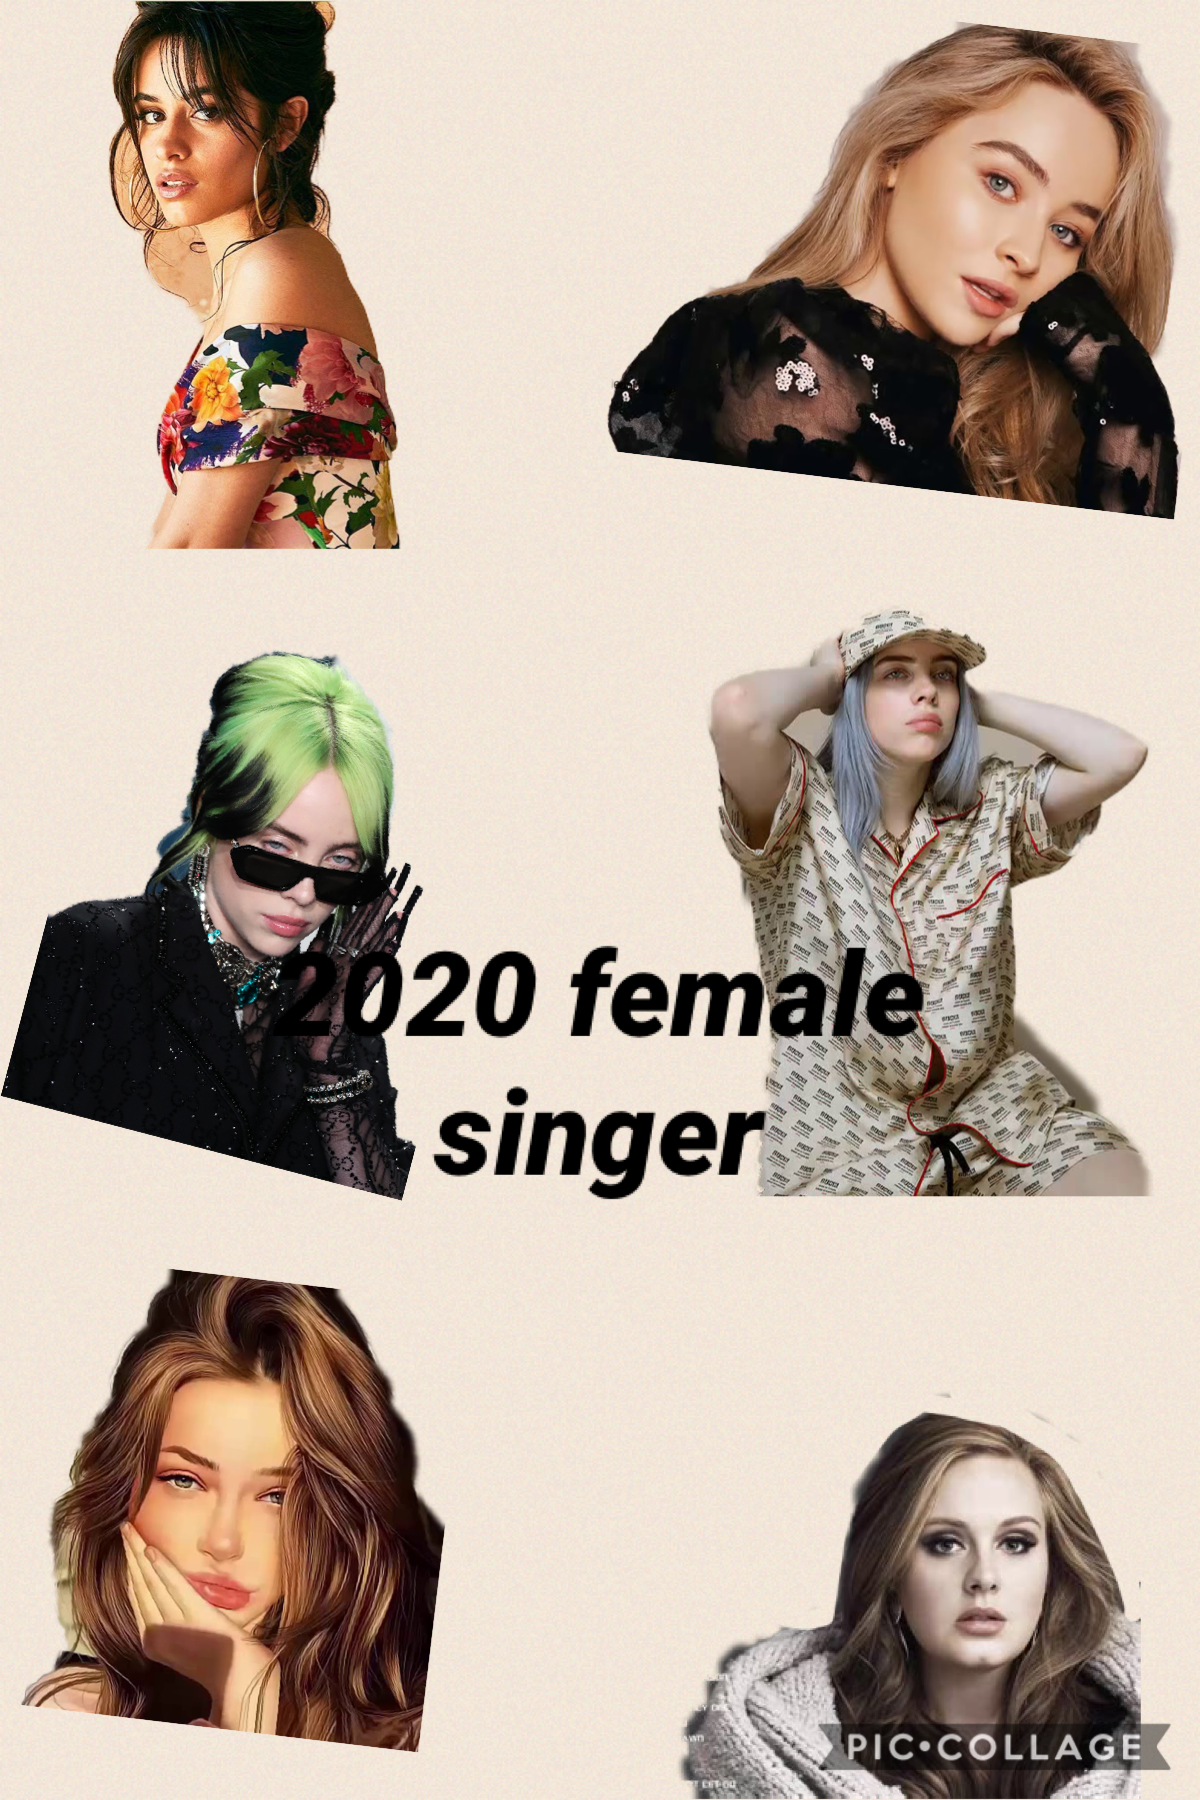 Singer 2020 Pop 
